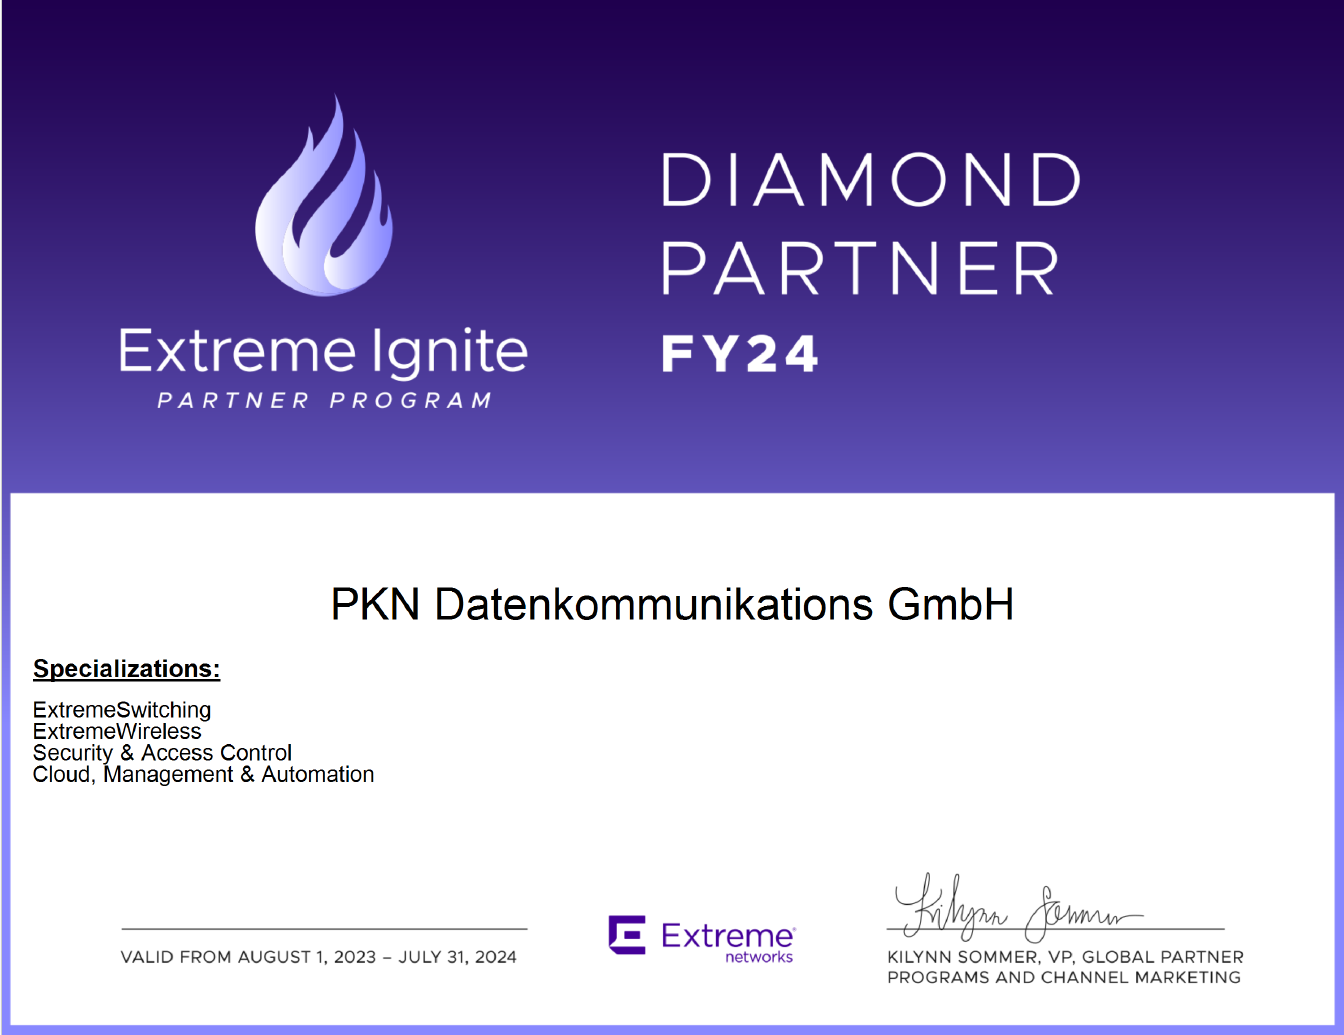 Zertifikat als Extreme Diamond Partner FY24 für PKN